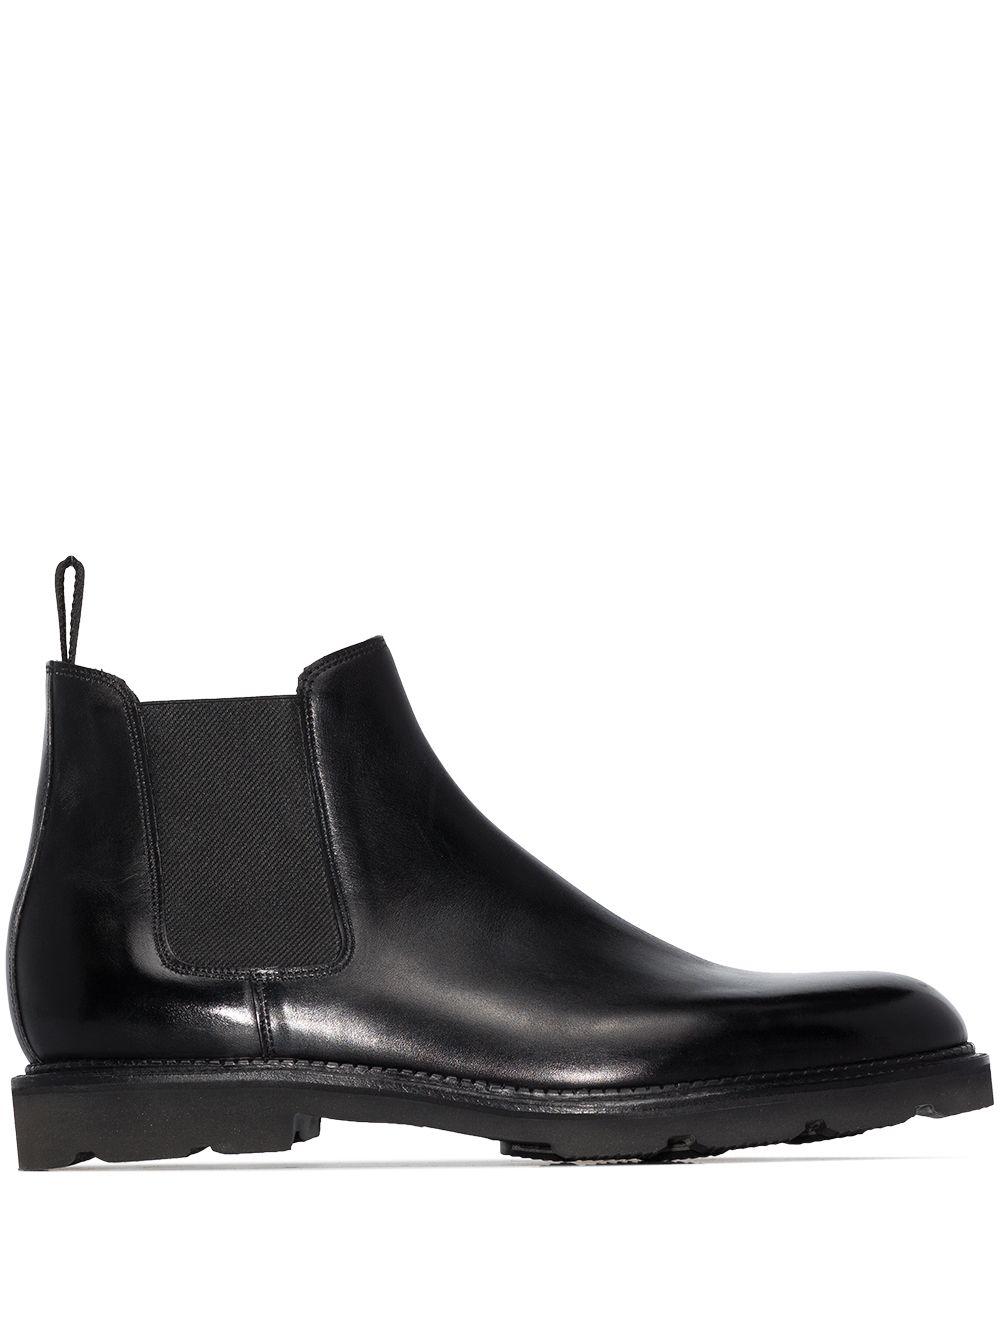 John Lobb Leather Lawry Chelsea Boots in Black for Men - Lyst